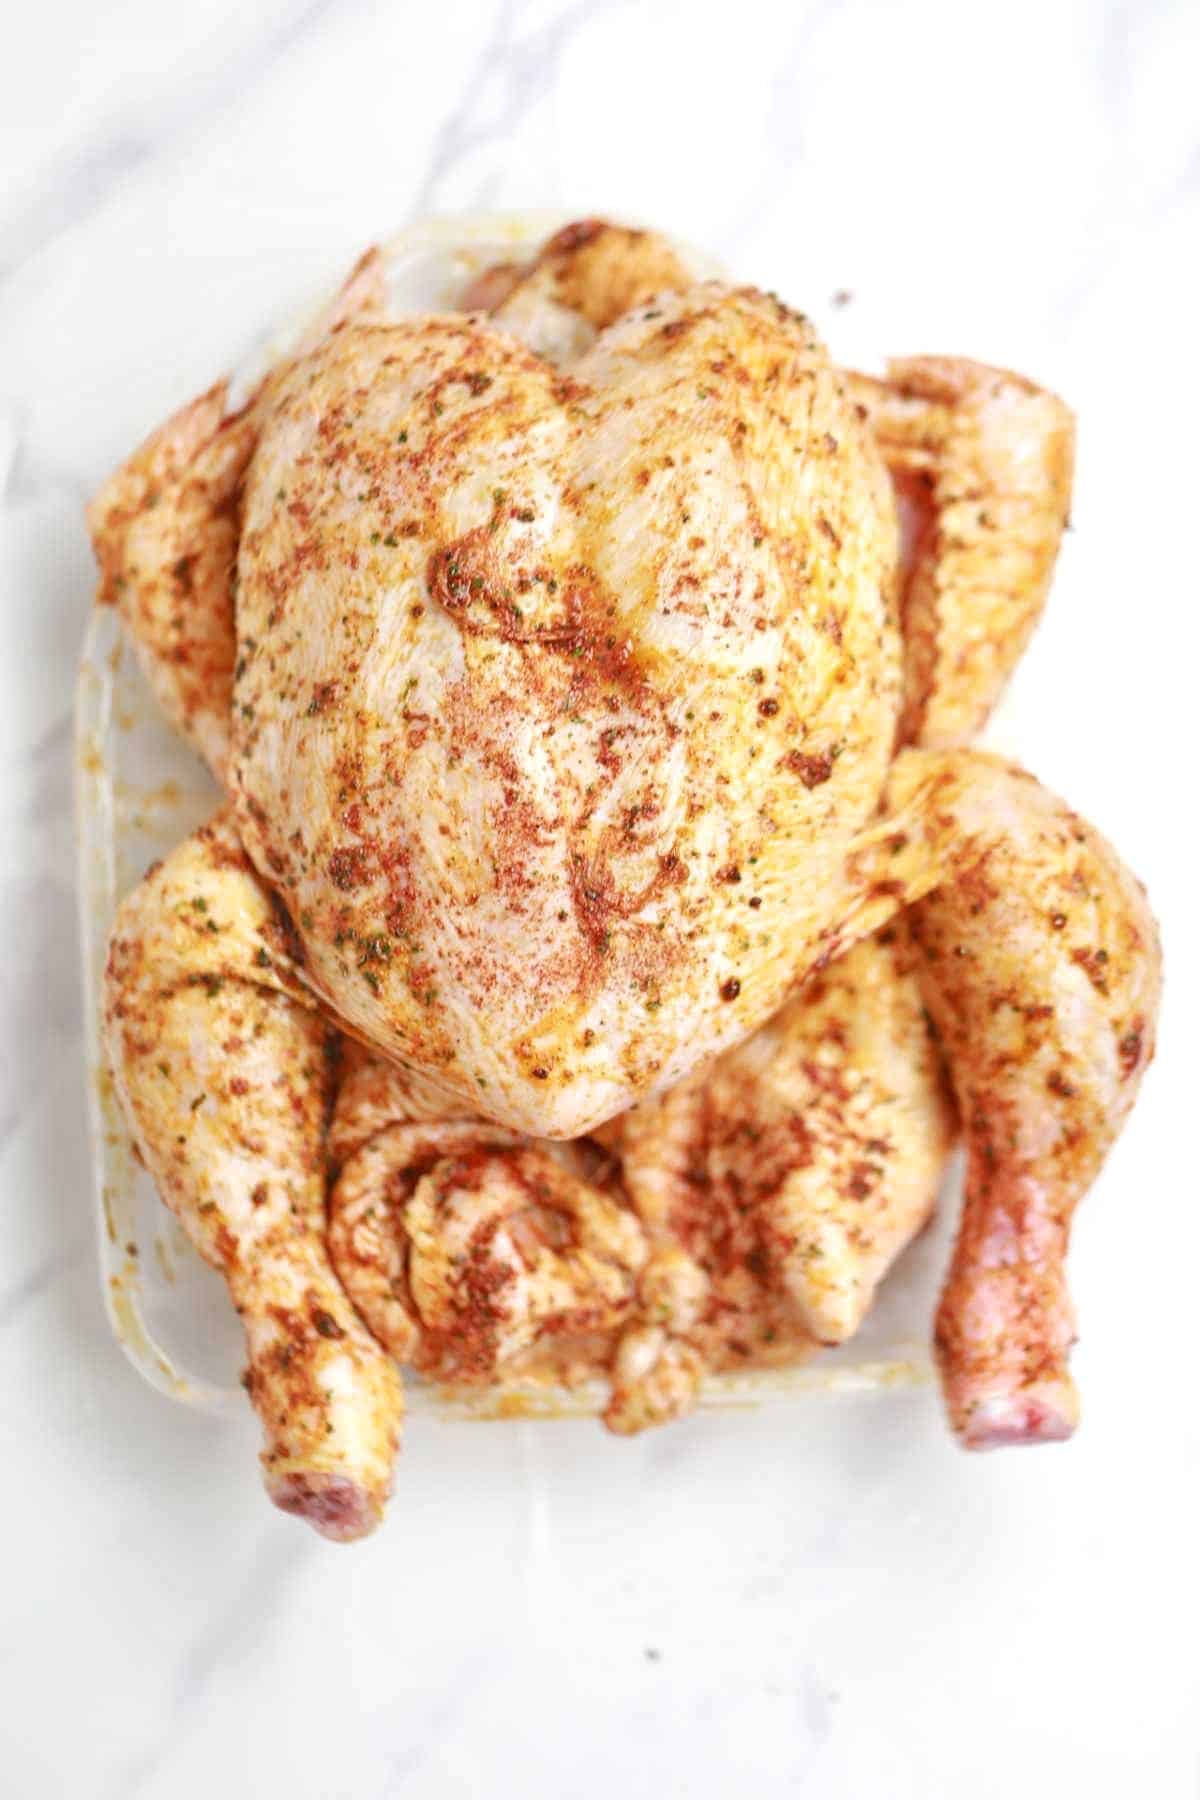 the marinated chicken displayed.